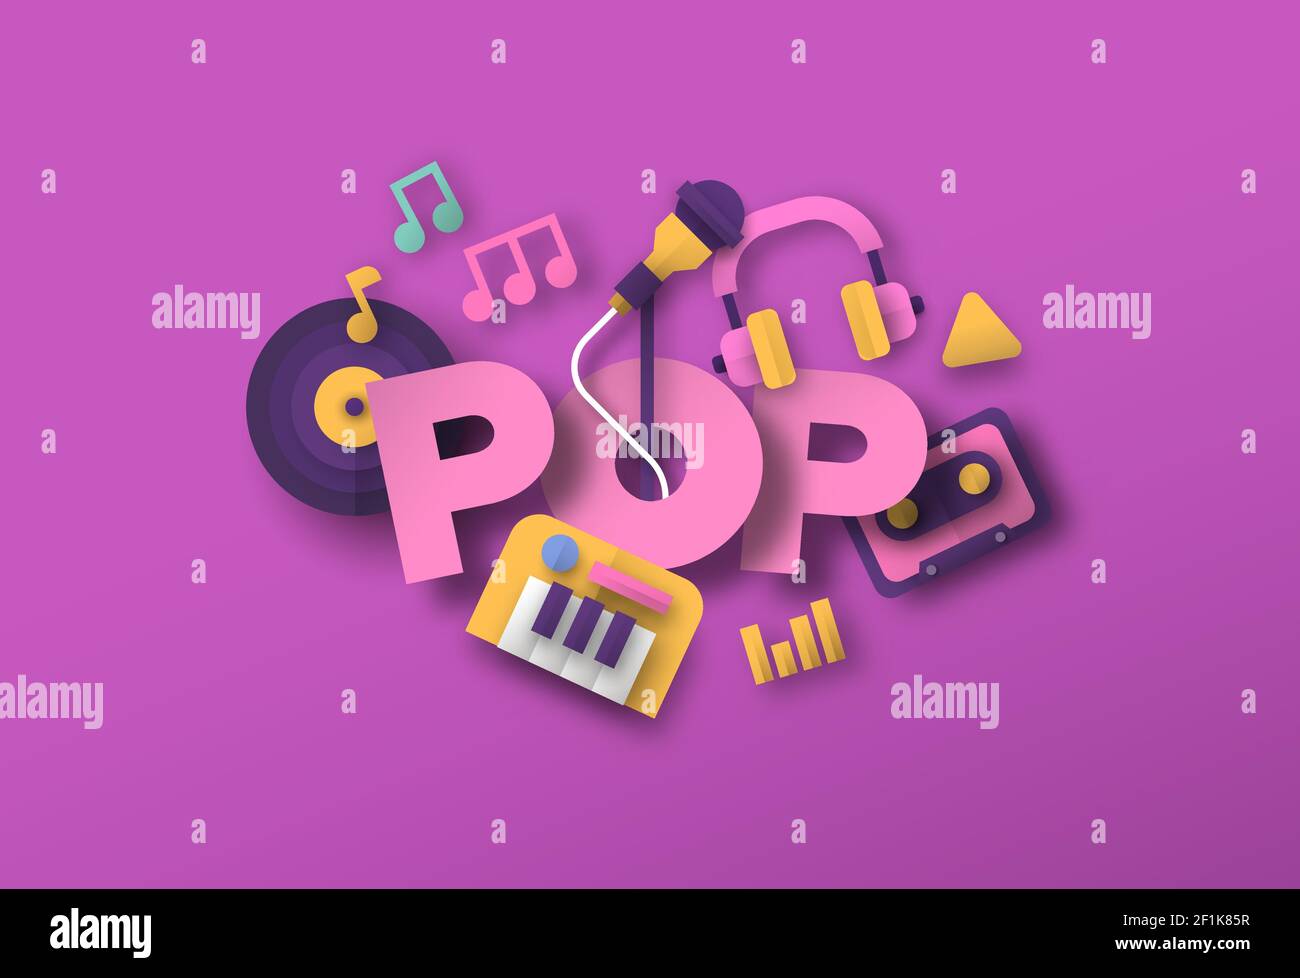 Pop-Musik Stil Illustration mit 3D Papier geschnitten Musikinstrument Ausrüstung Symbole. Kreatives Festival, Konzertevent Konzept. Enthält Sänger Mikrophon Stock Vektor